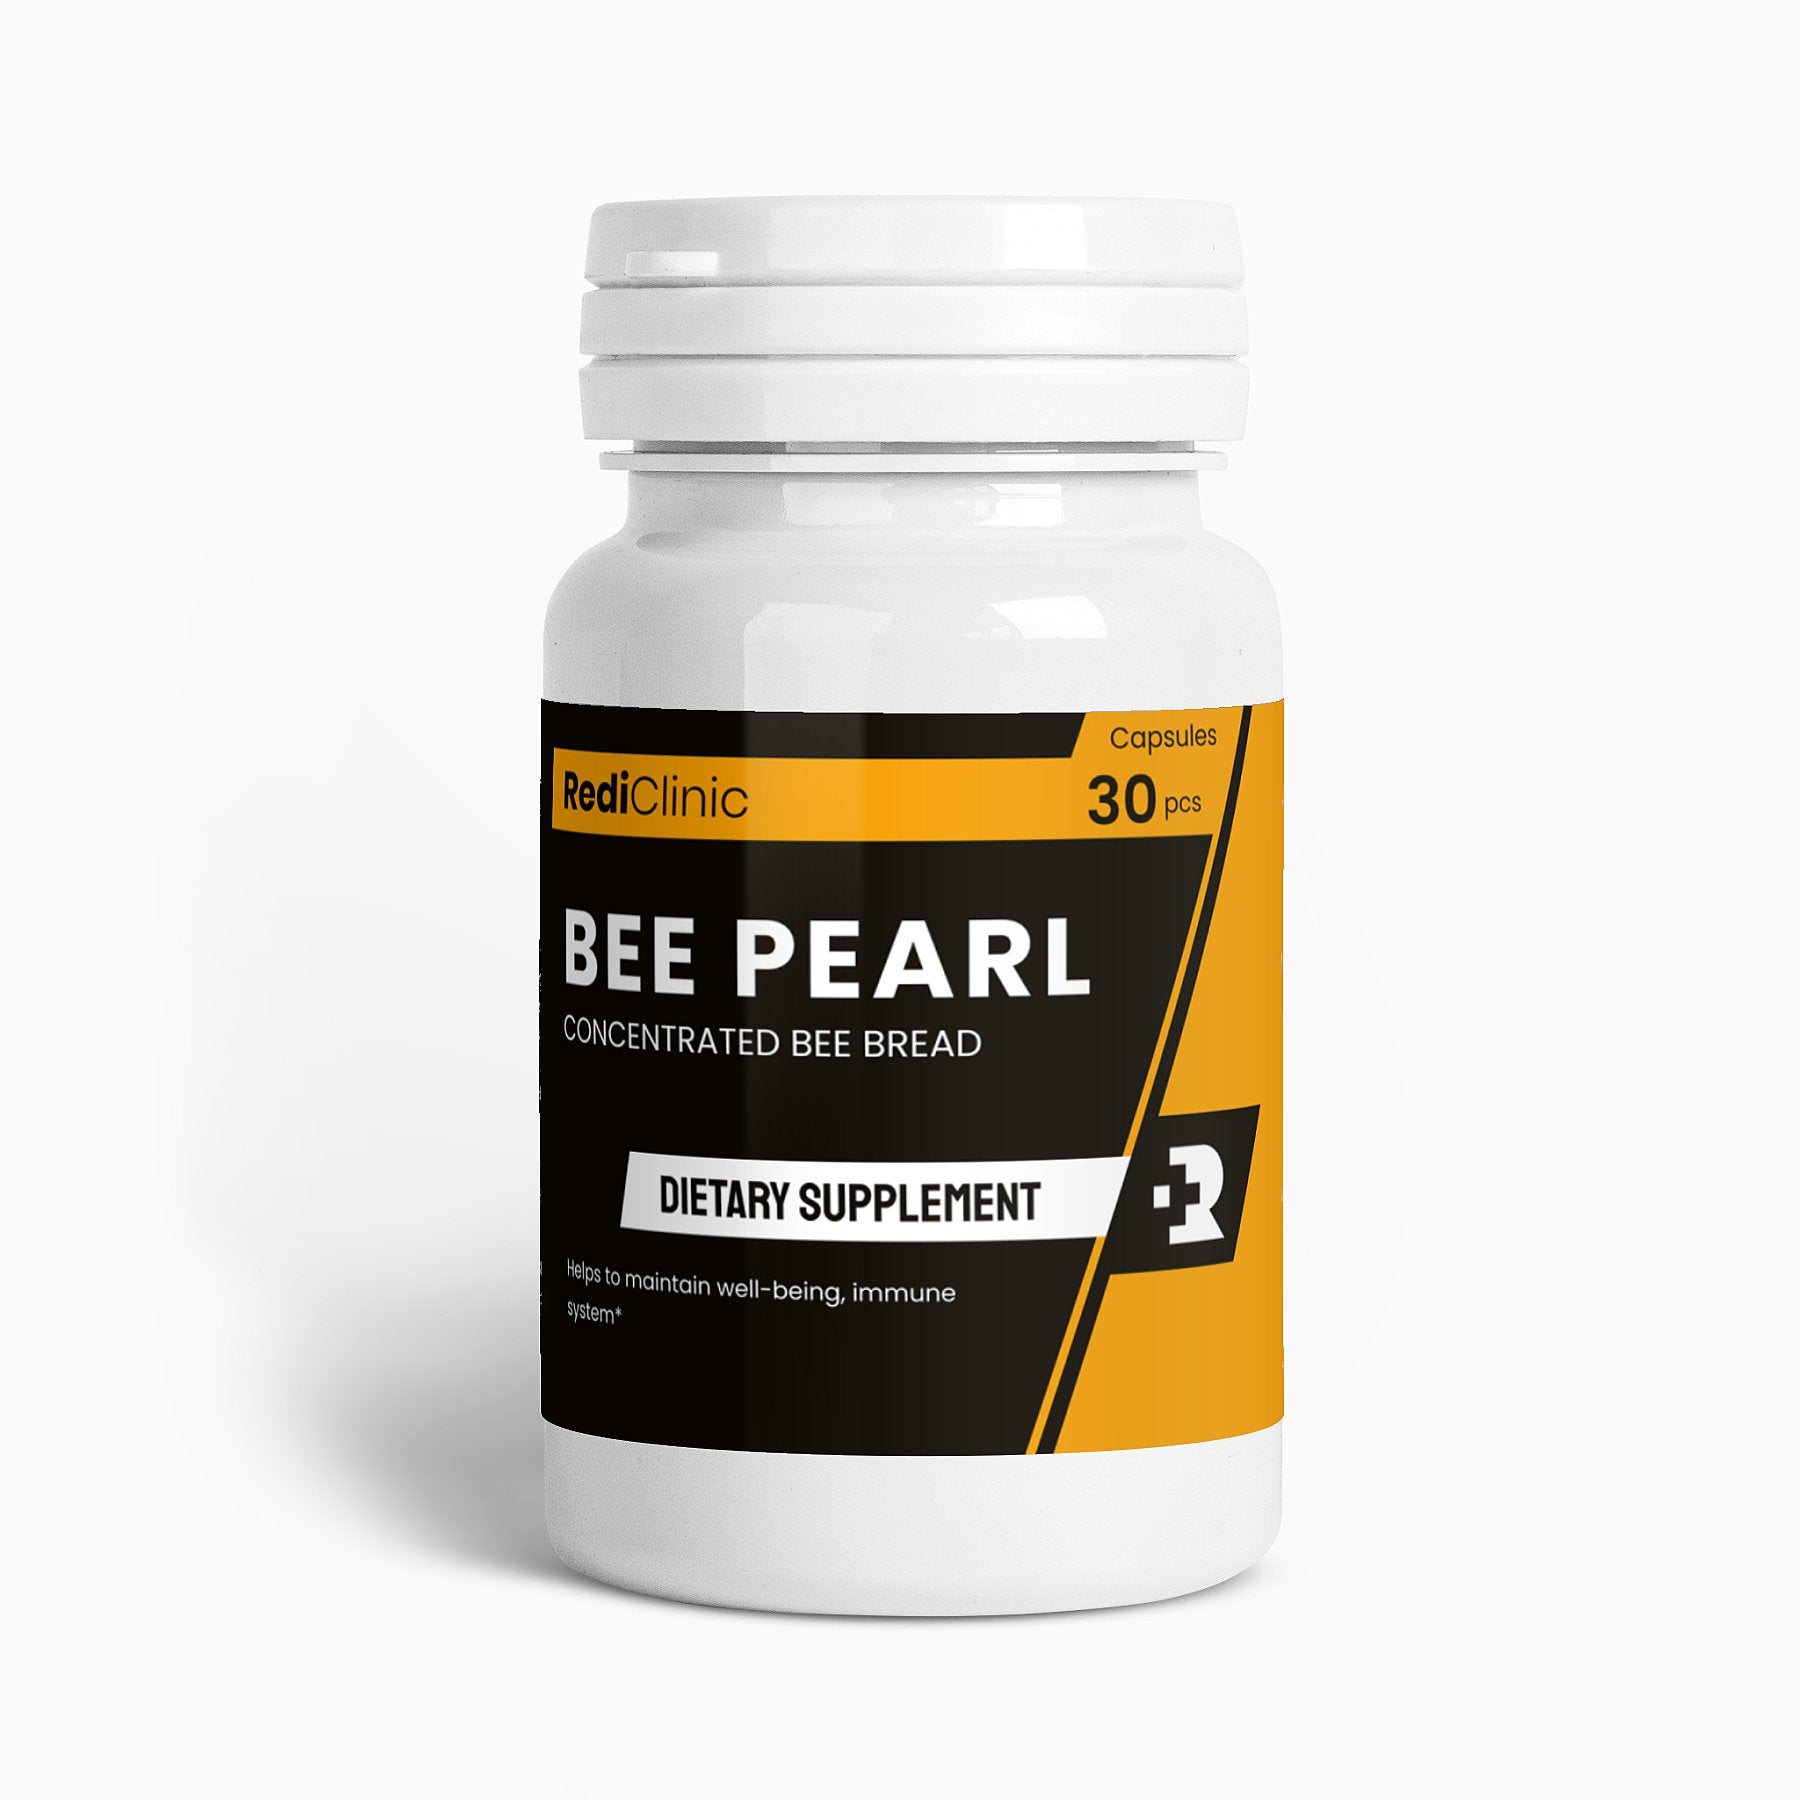 Rediclinic Bee Pearl Capsules